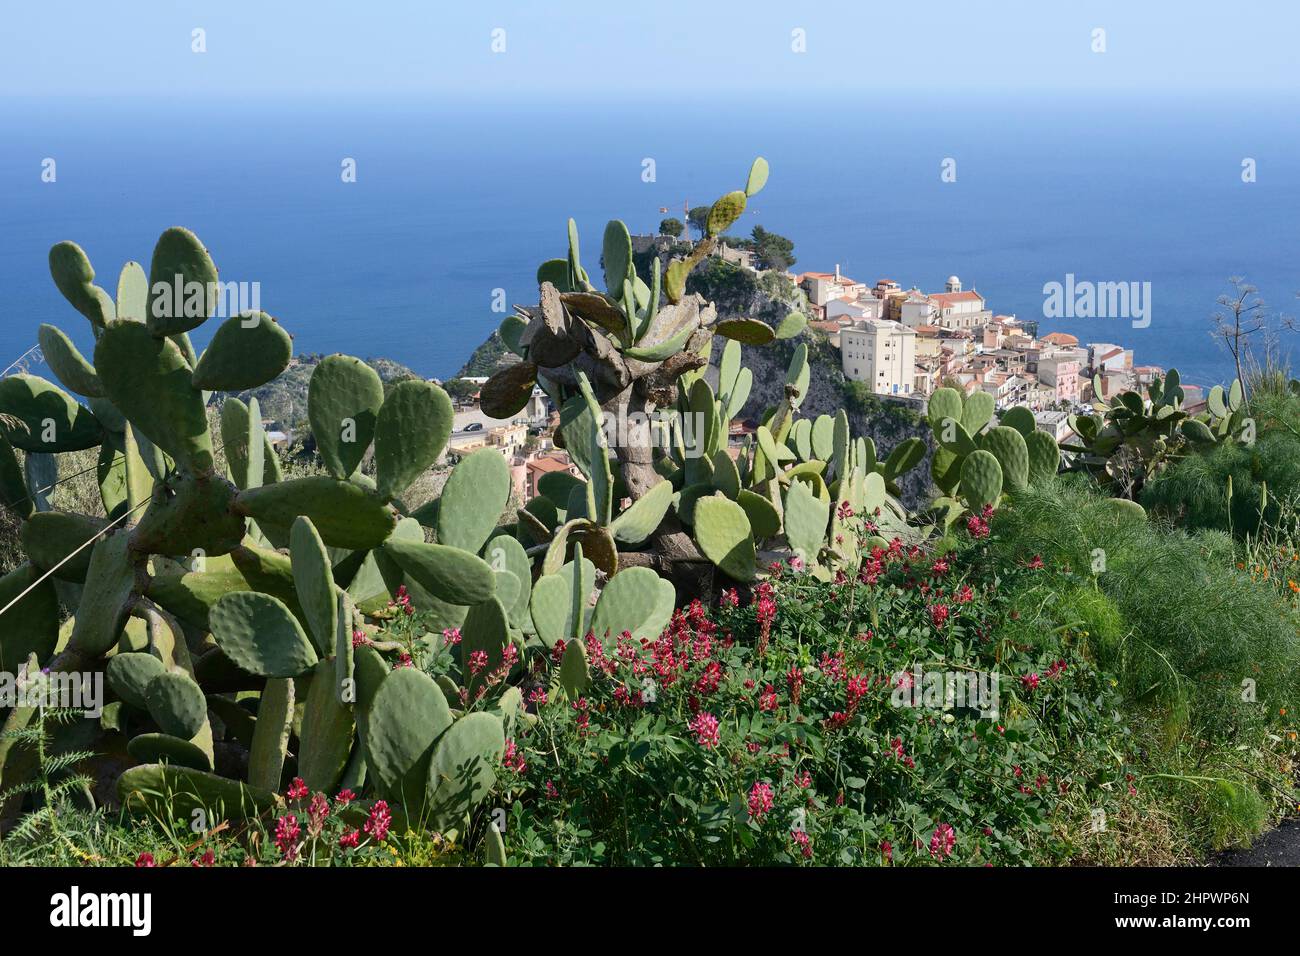 Cactus pear (Opuntia ficus-indica) and sulla coronaria (Hedysarum coronarium) in front of mountain village, Sicily, Italy Stock Photo